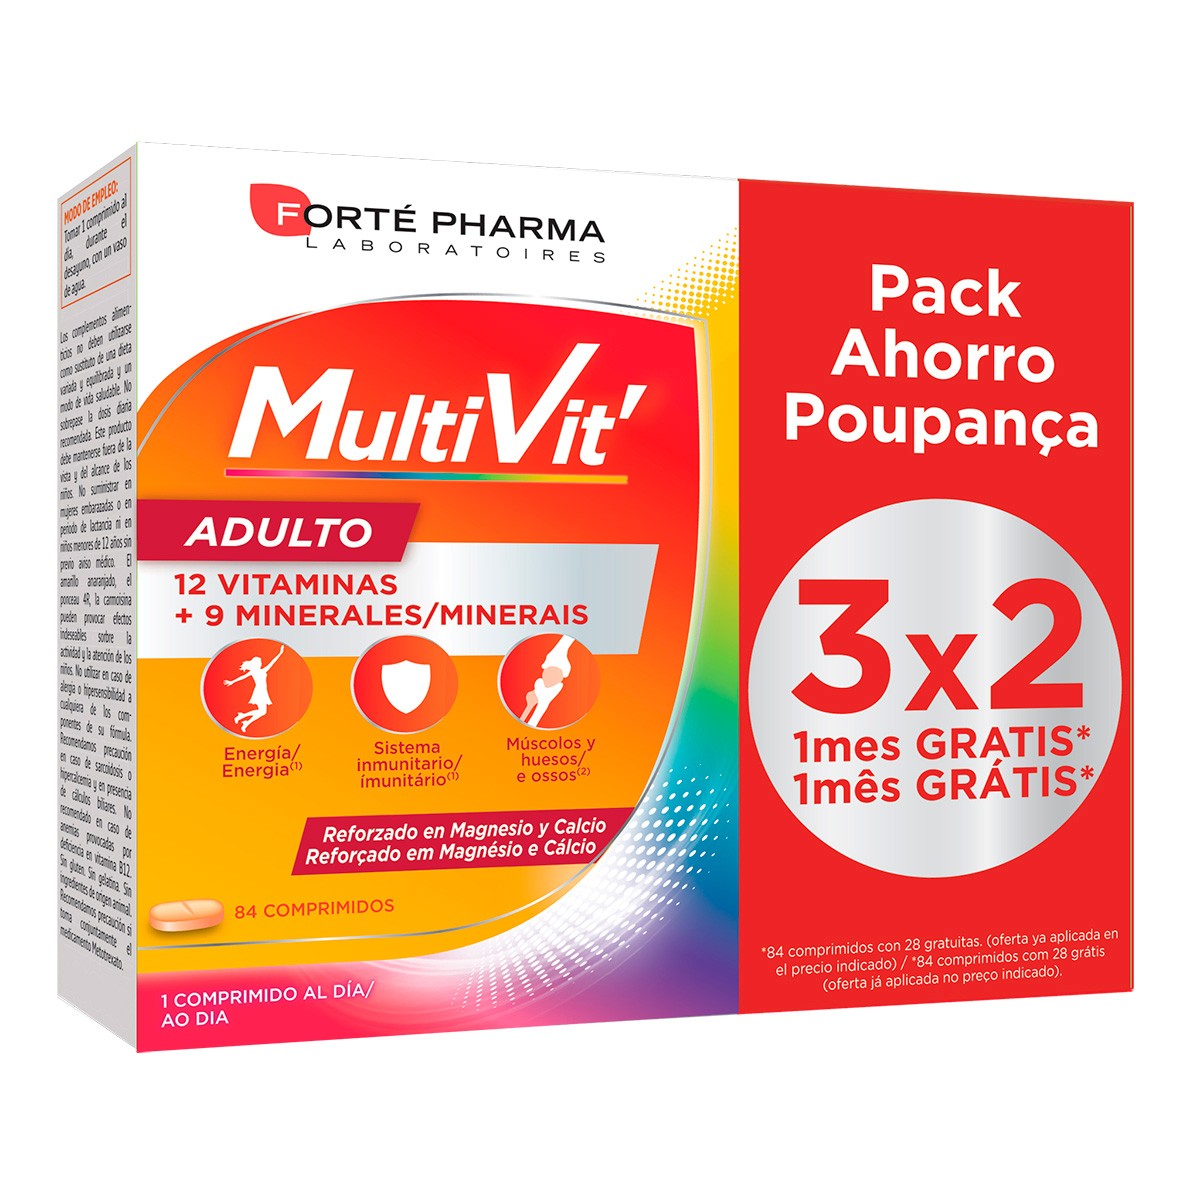 Forte pharma energy multivit adulto 84 comprimidos